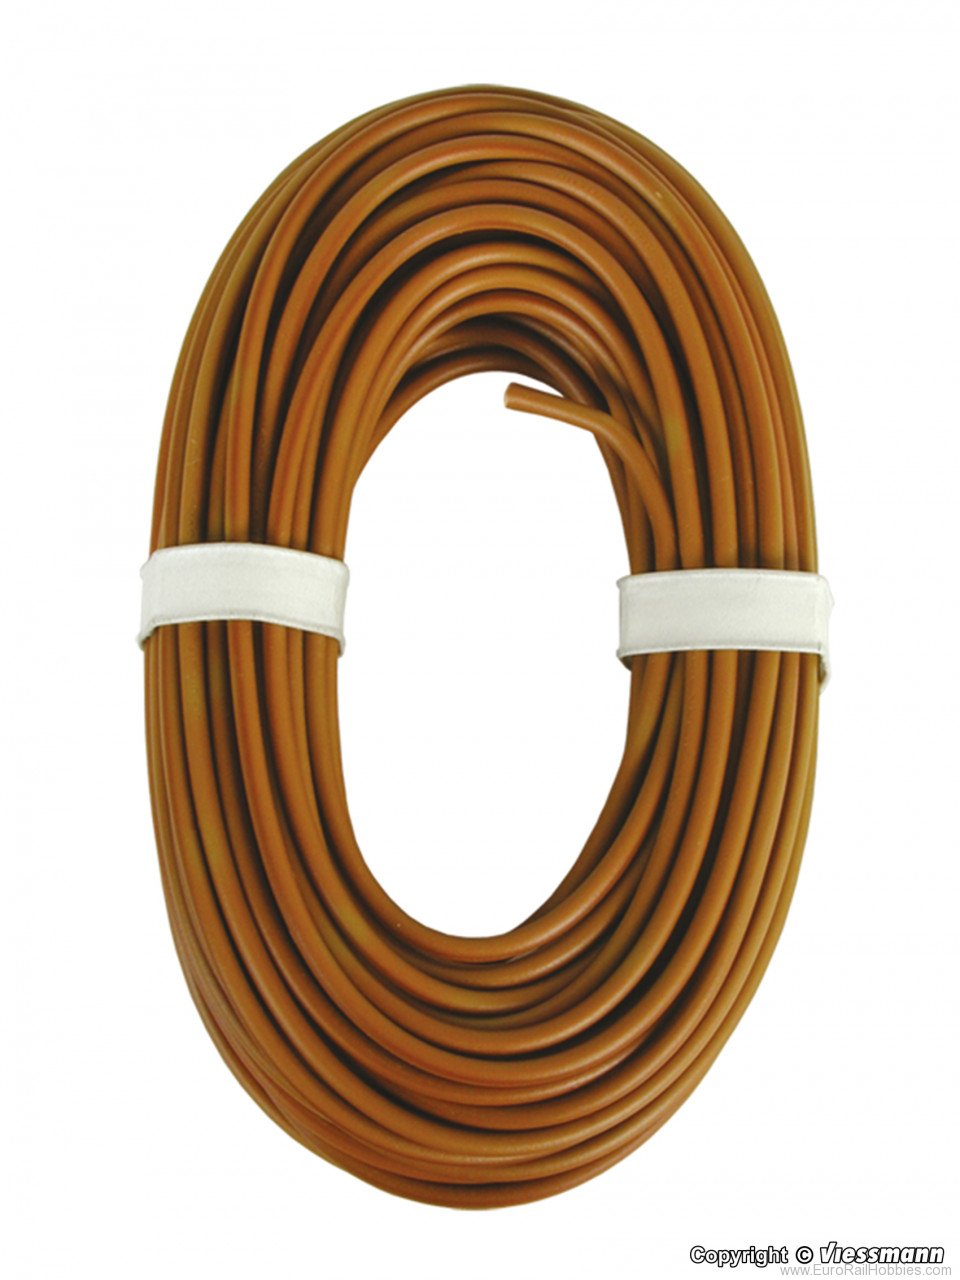 Viessmann 6896 High-current cable, 0,75 mm dia., brown, 10 m